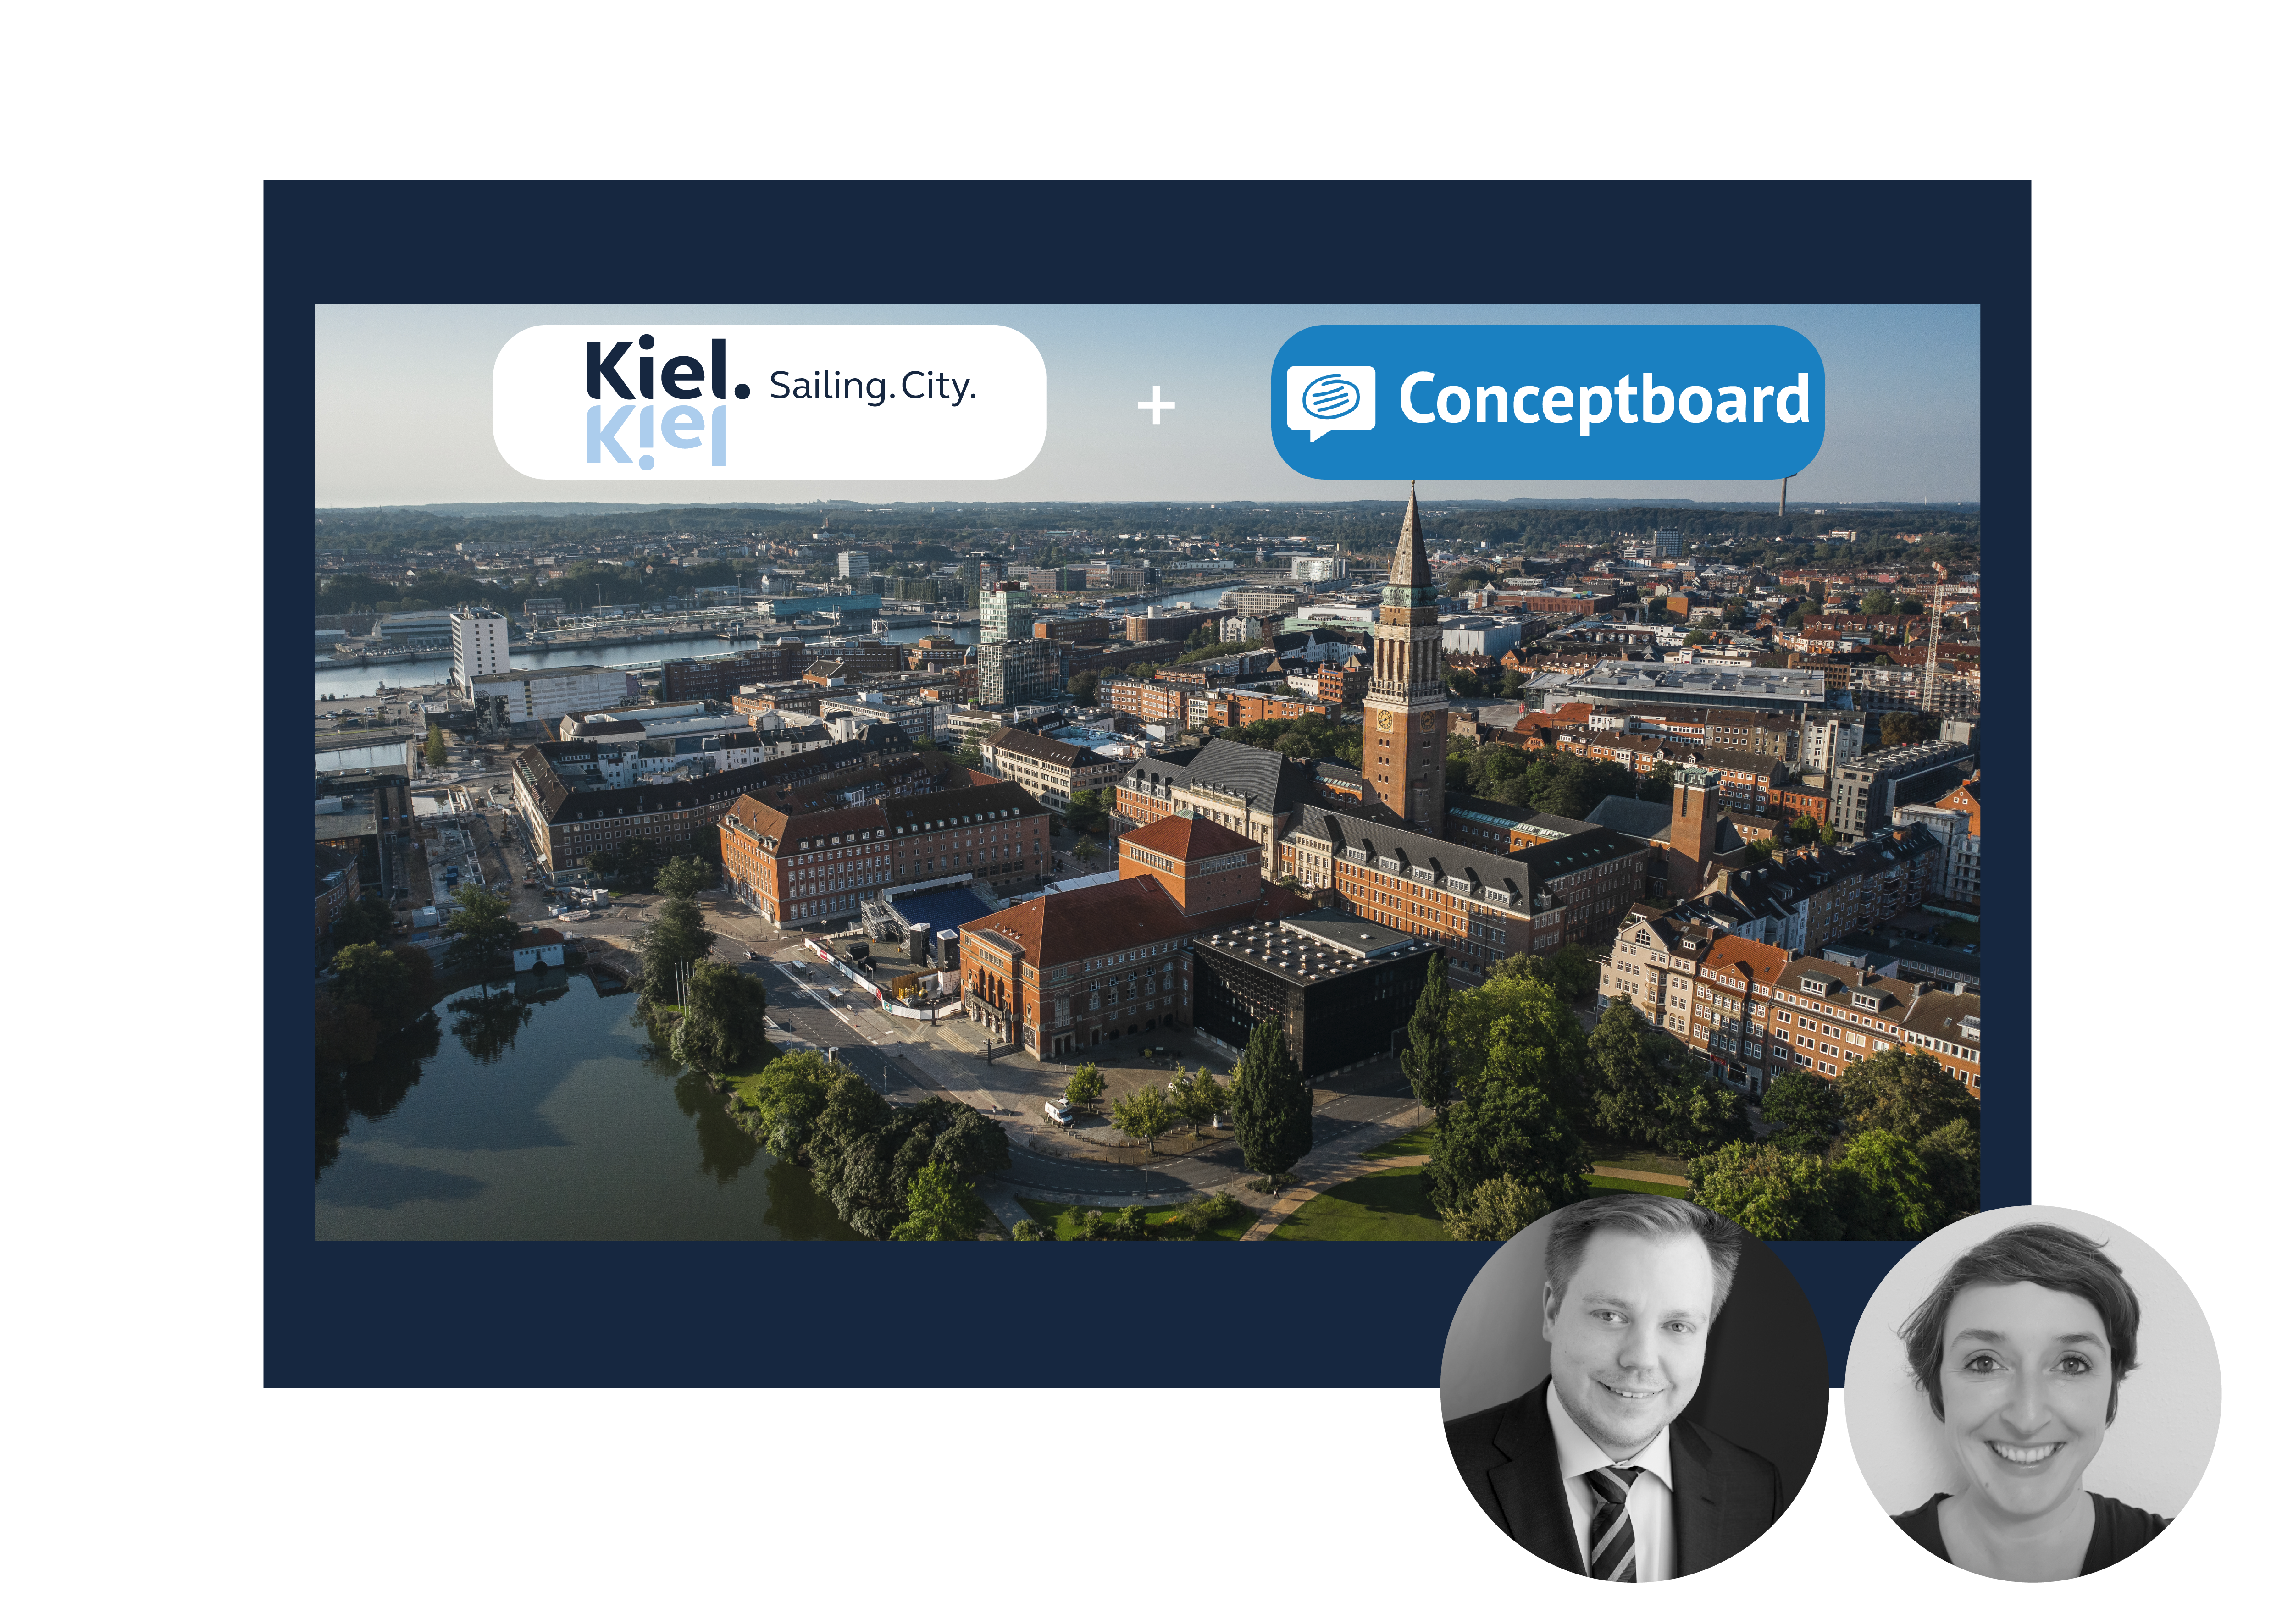 Stadt Kiel fördert die digitale Transformation mit Conceptboard